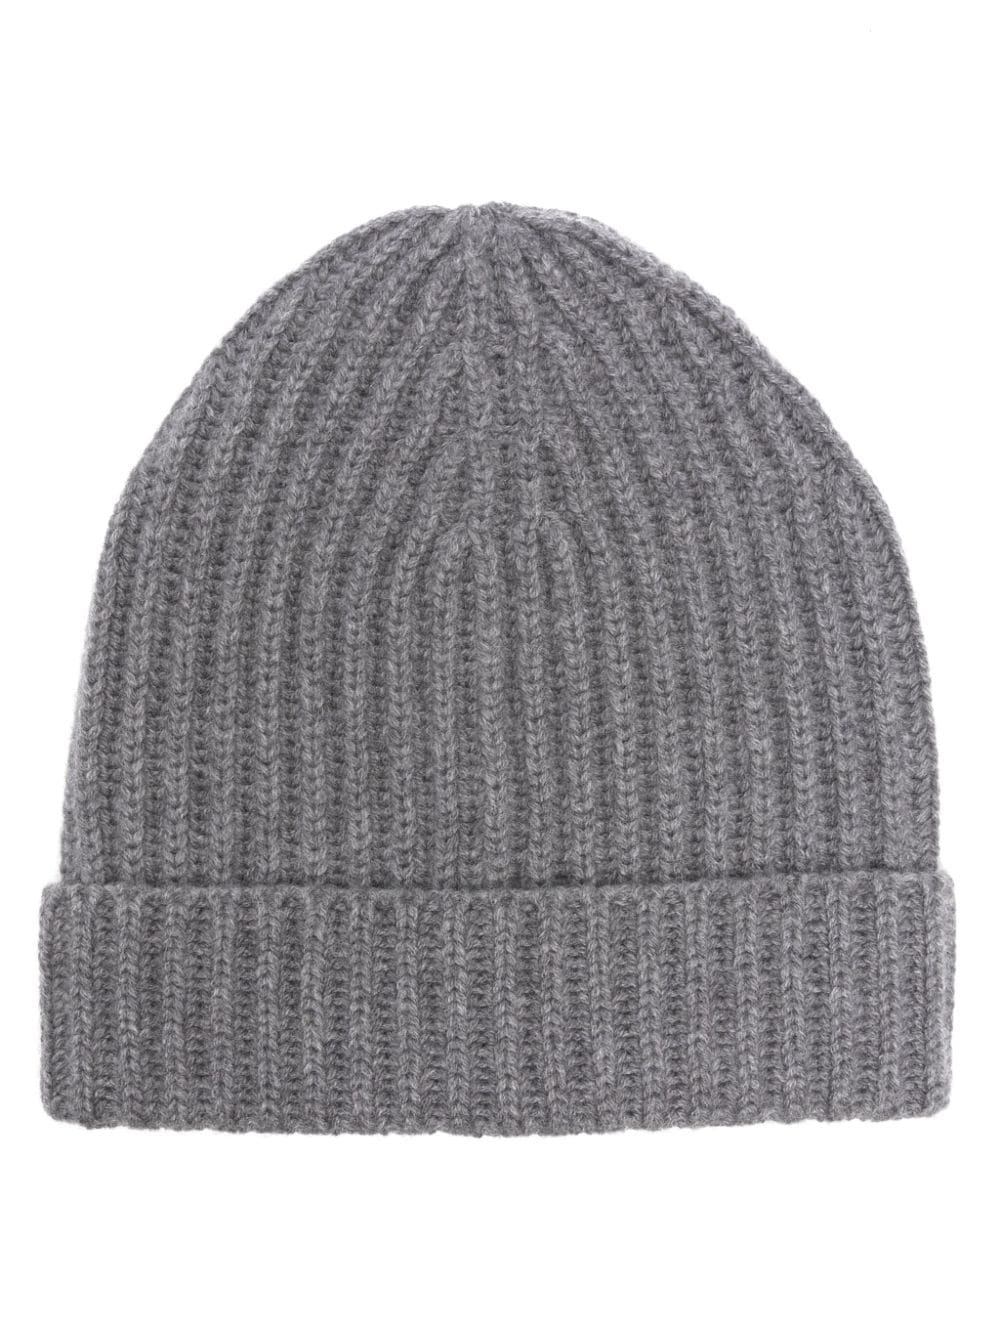 gray beanie hat